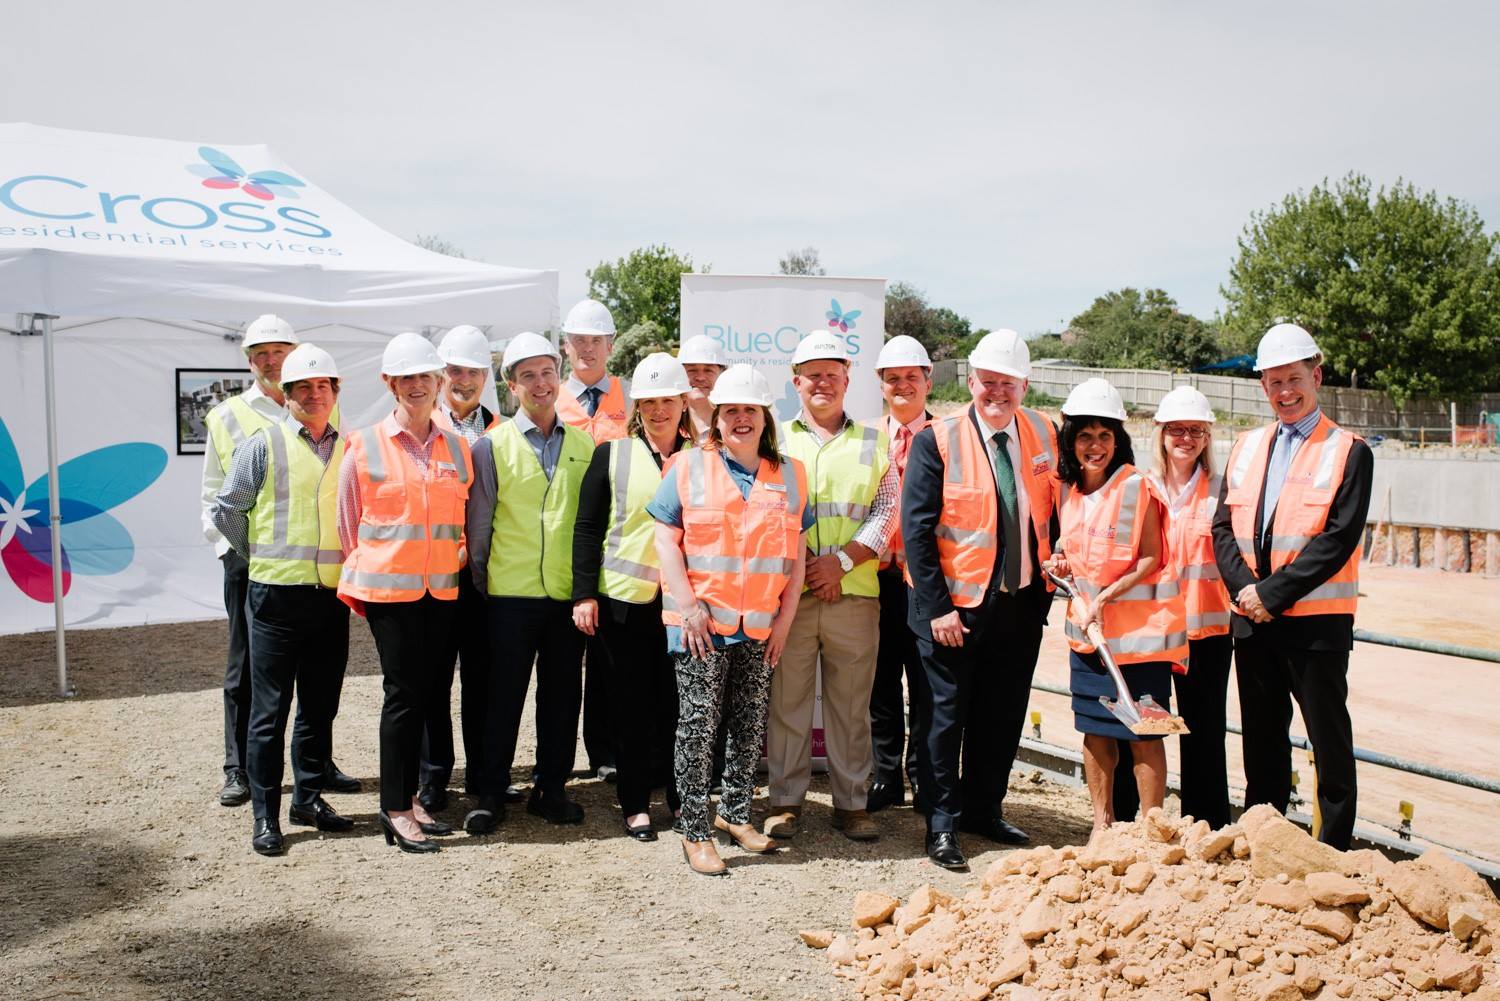 Groundbreaking Ceremony Kicks off BlueCross Springfield Construction